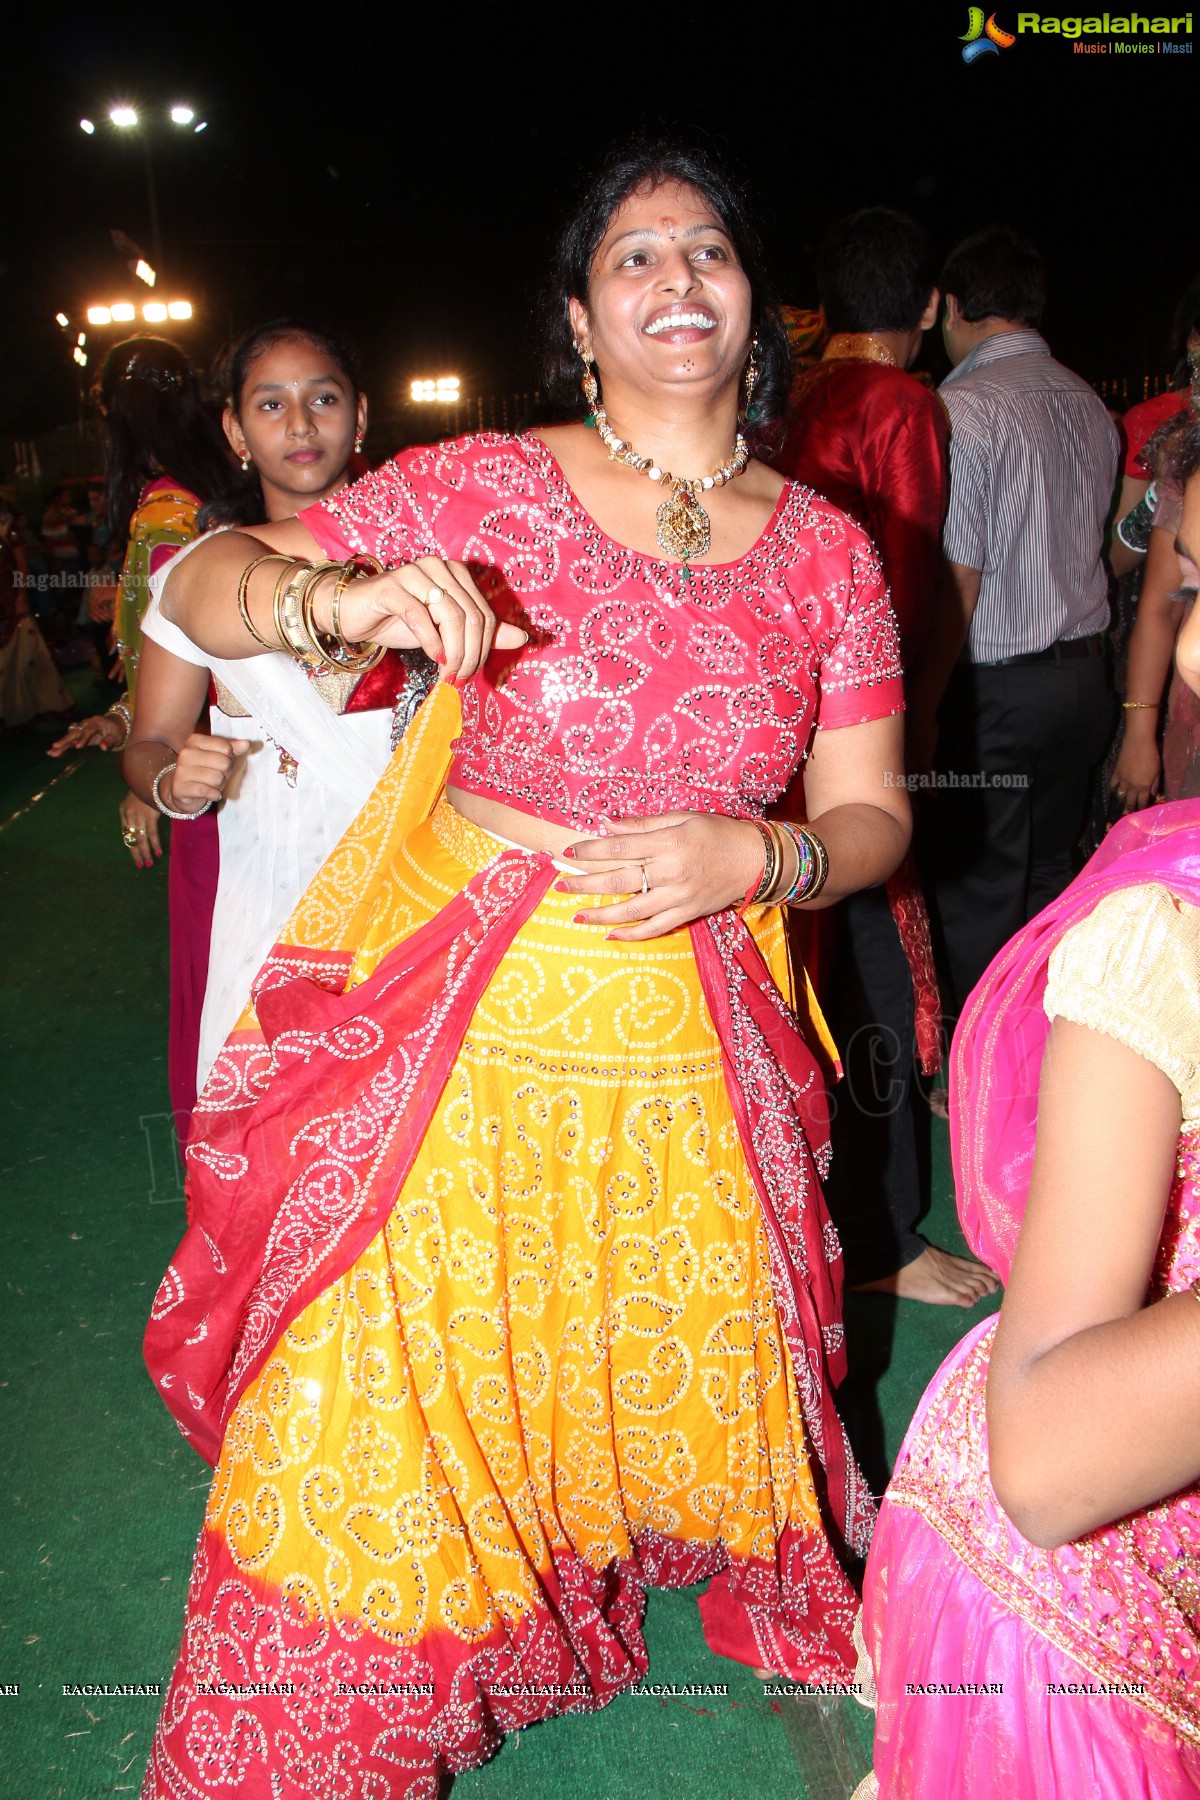 Legend Navratri Utsav 2013 Grand Finale - Judge: Bina Mehta